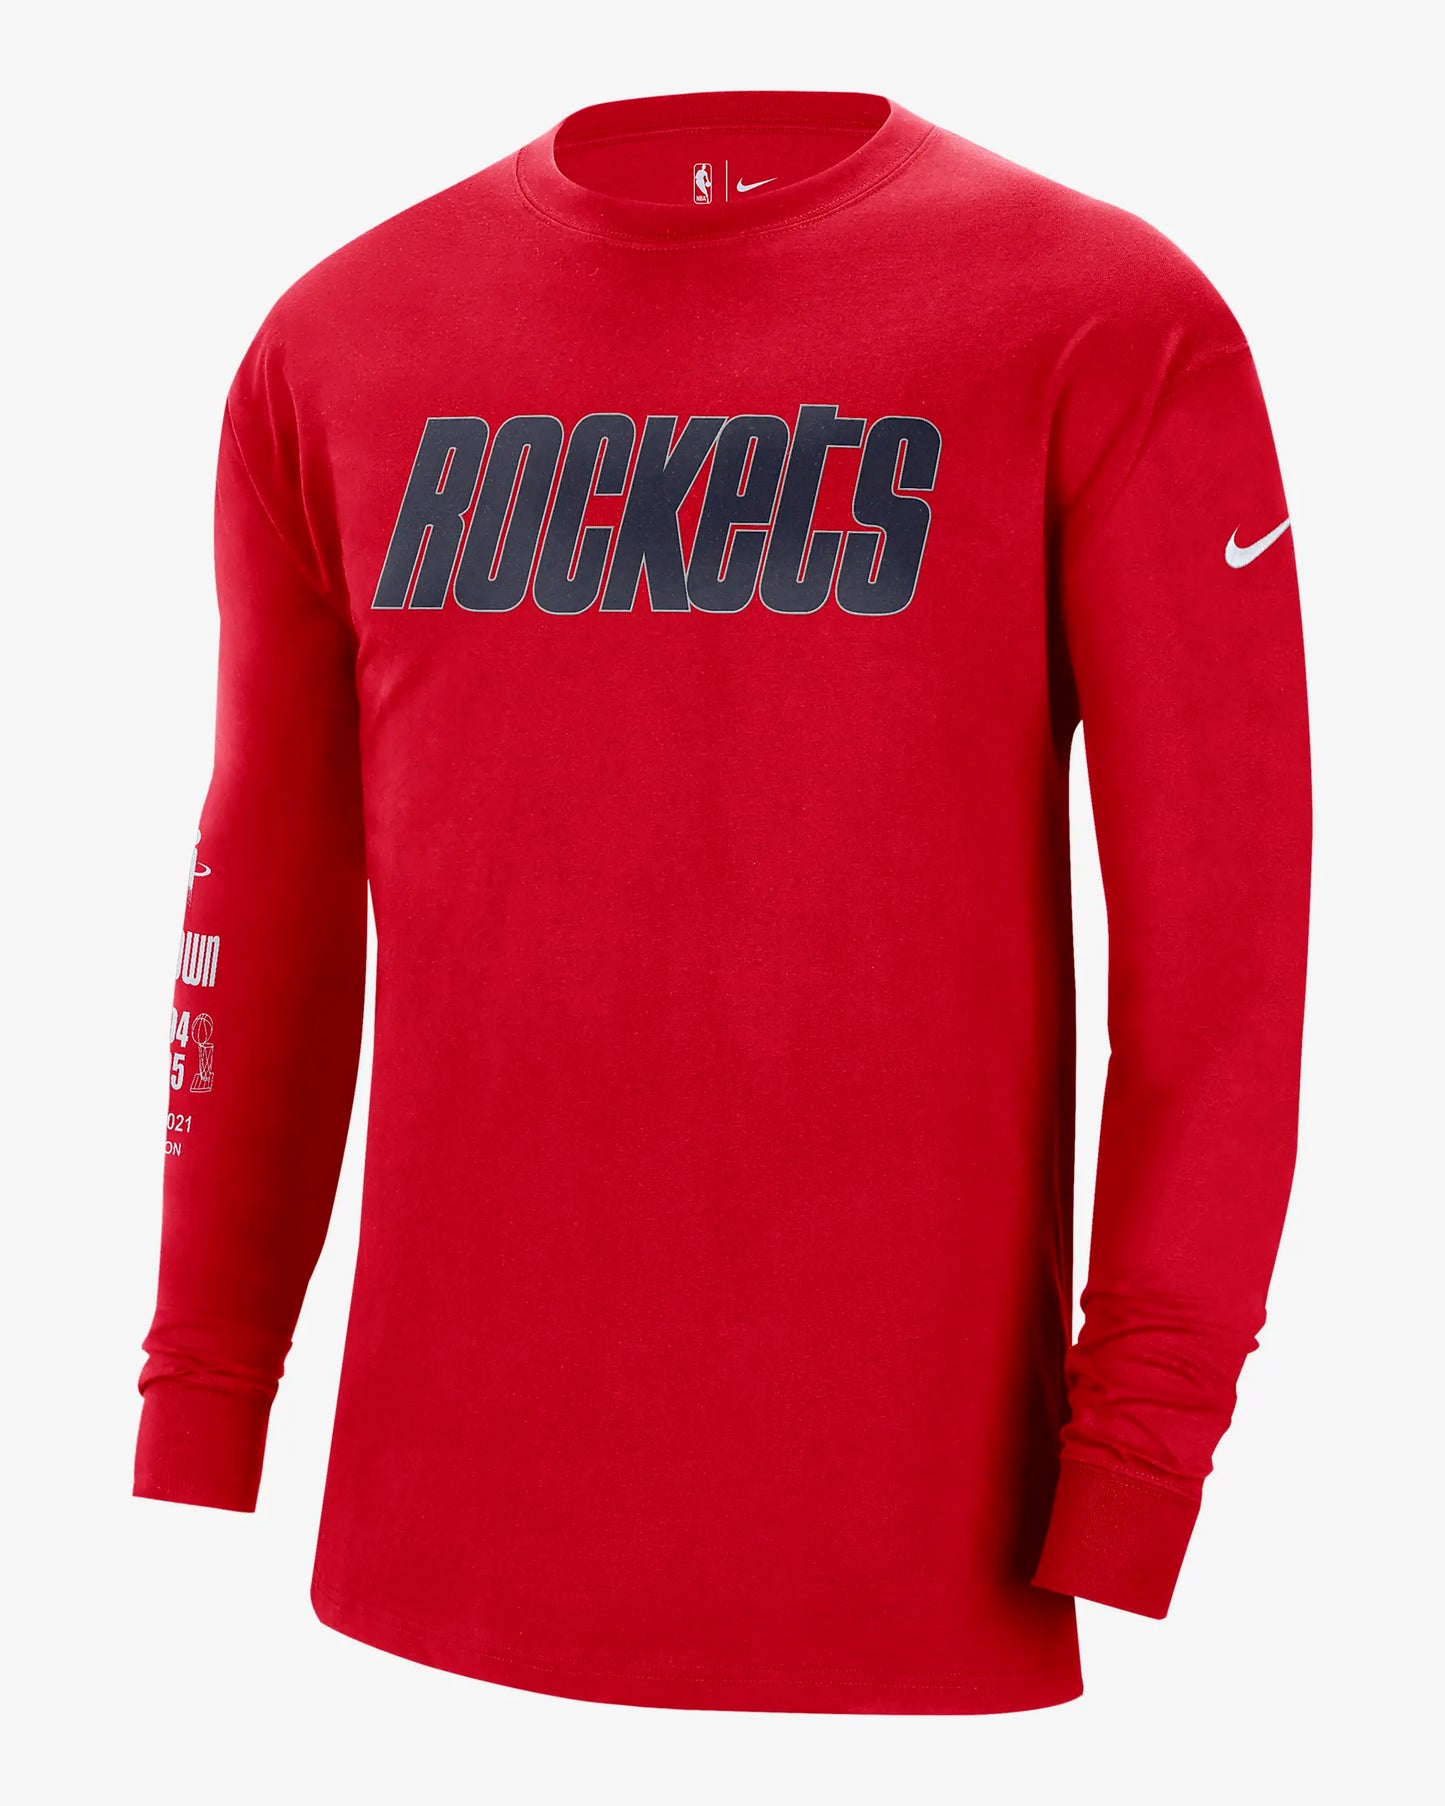 Washington Wizards Men's Nike Dri-FIT NBA Practice T-Shirt